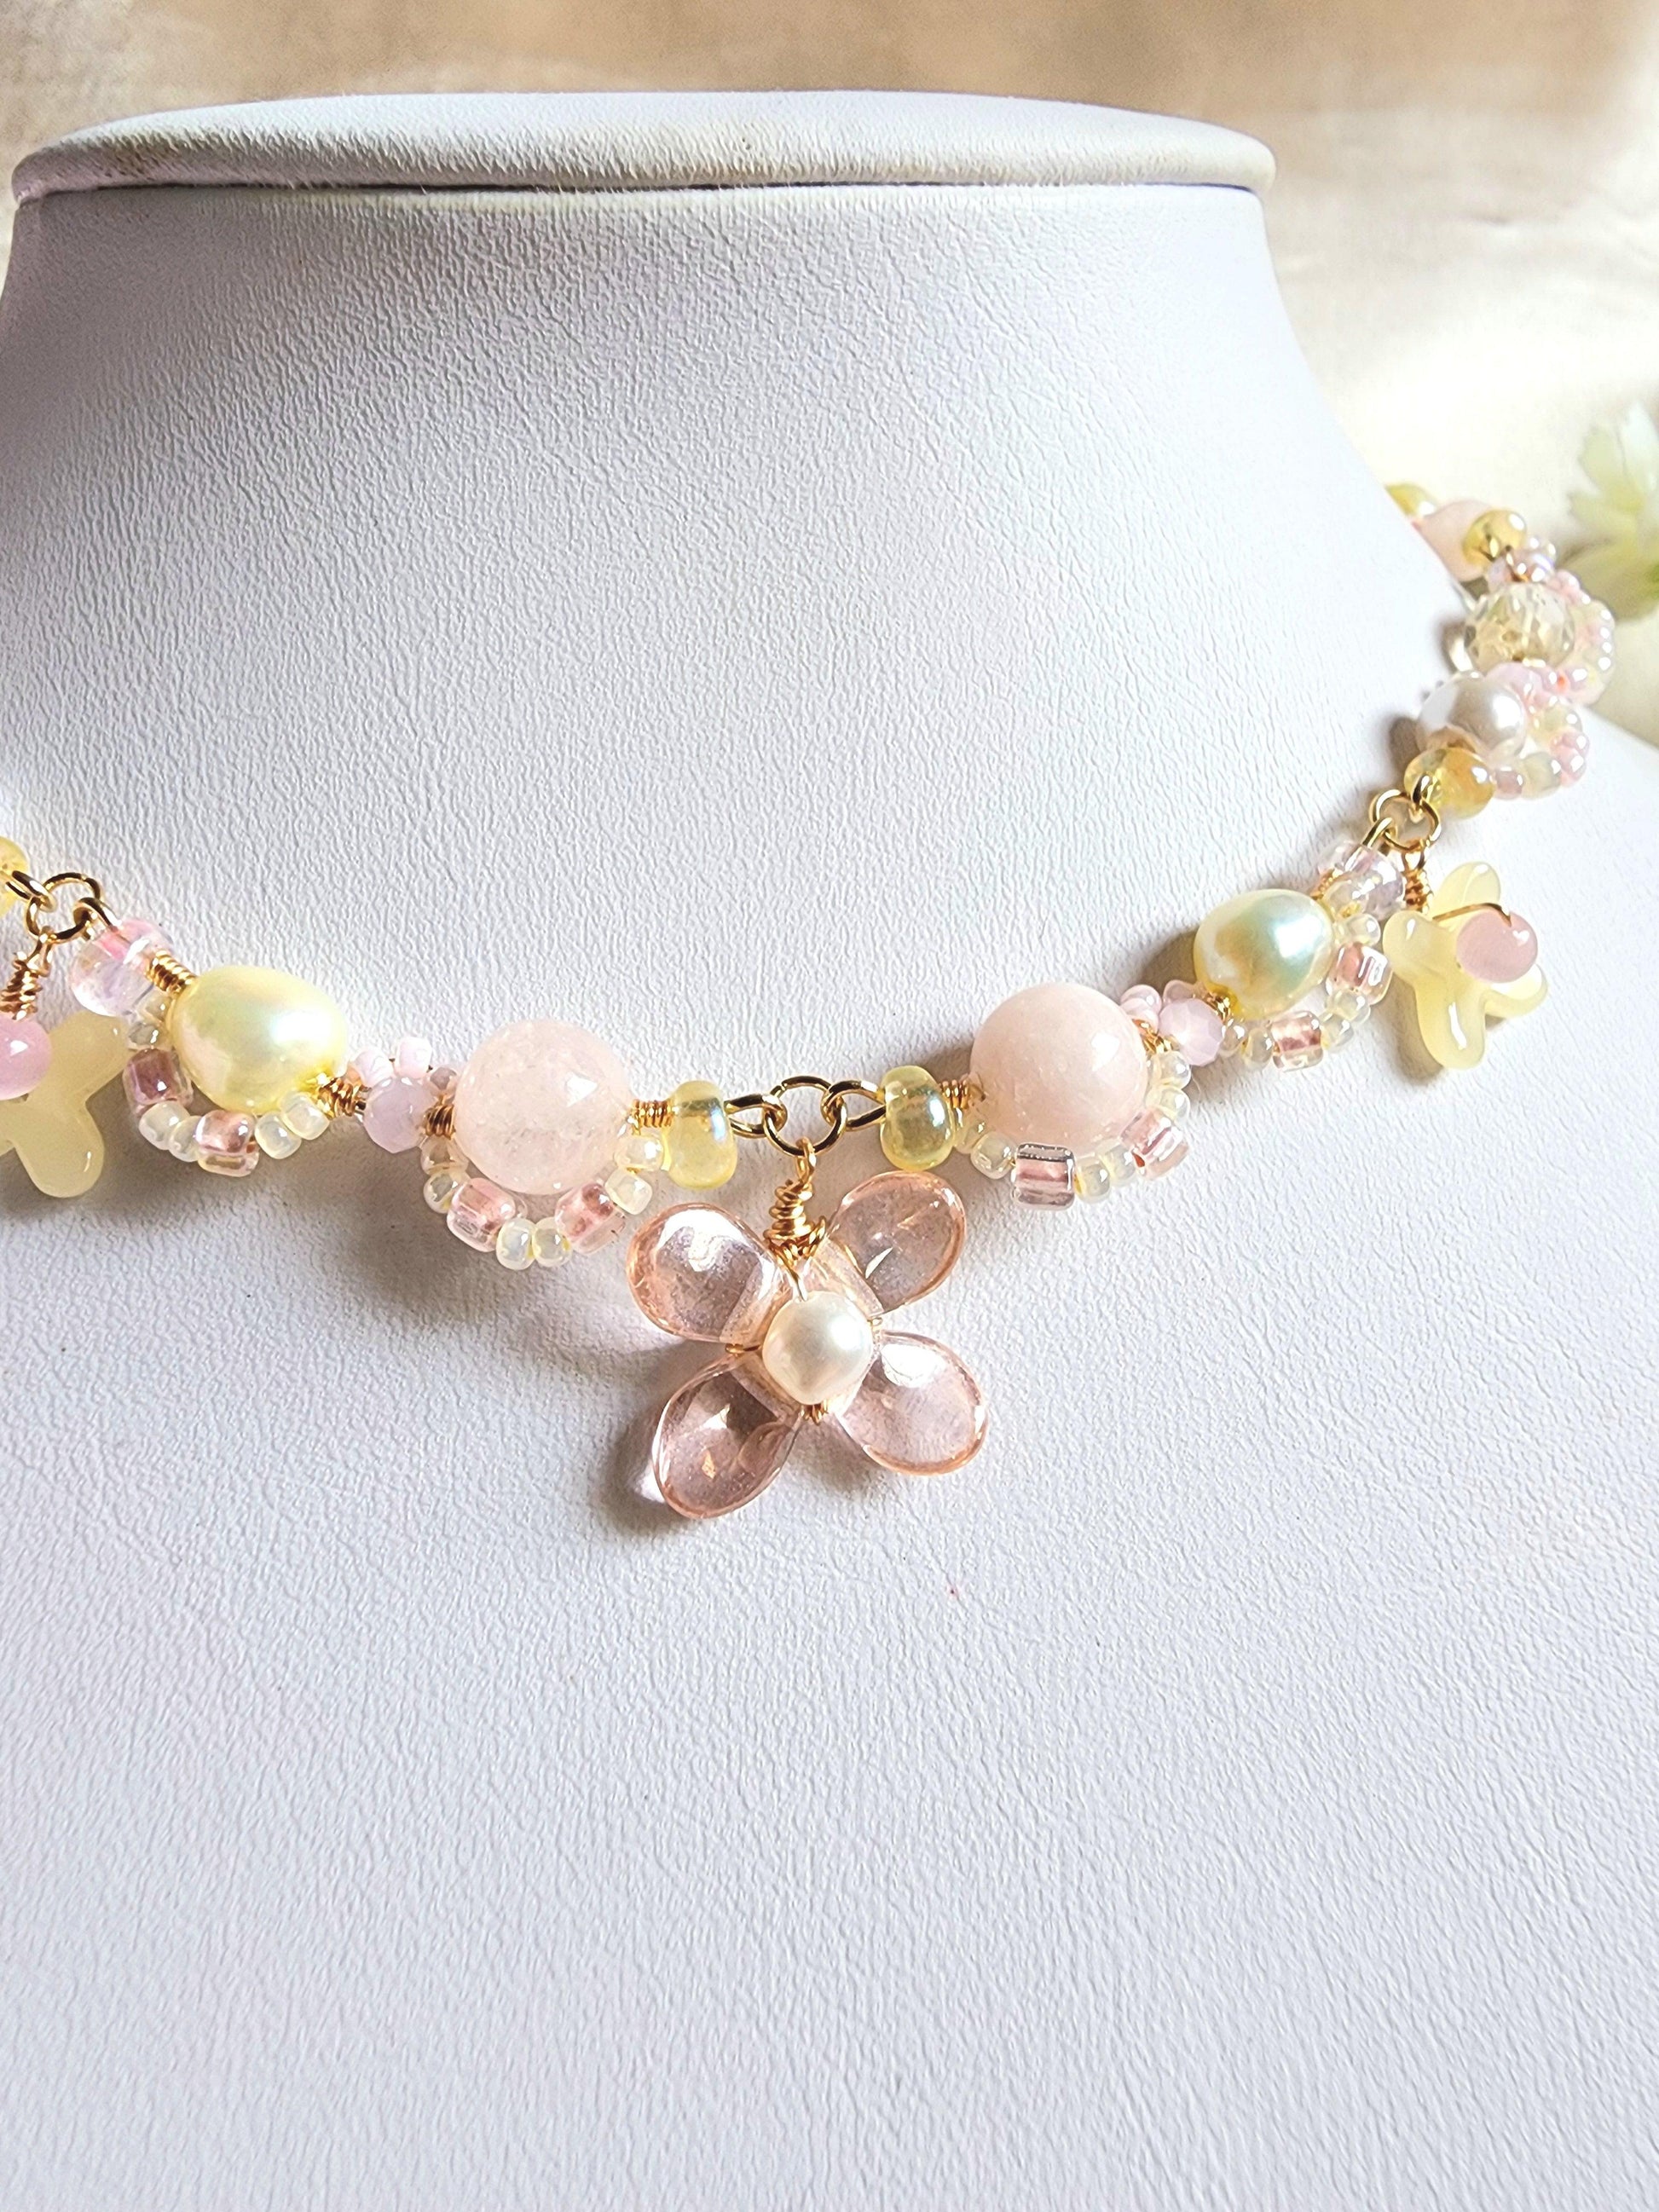 Pink Lemonade Necklace - By Cocoyu